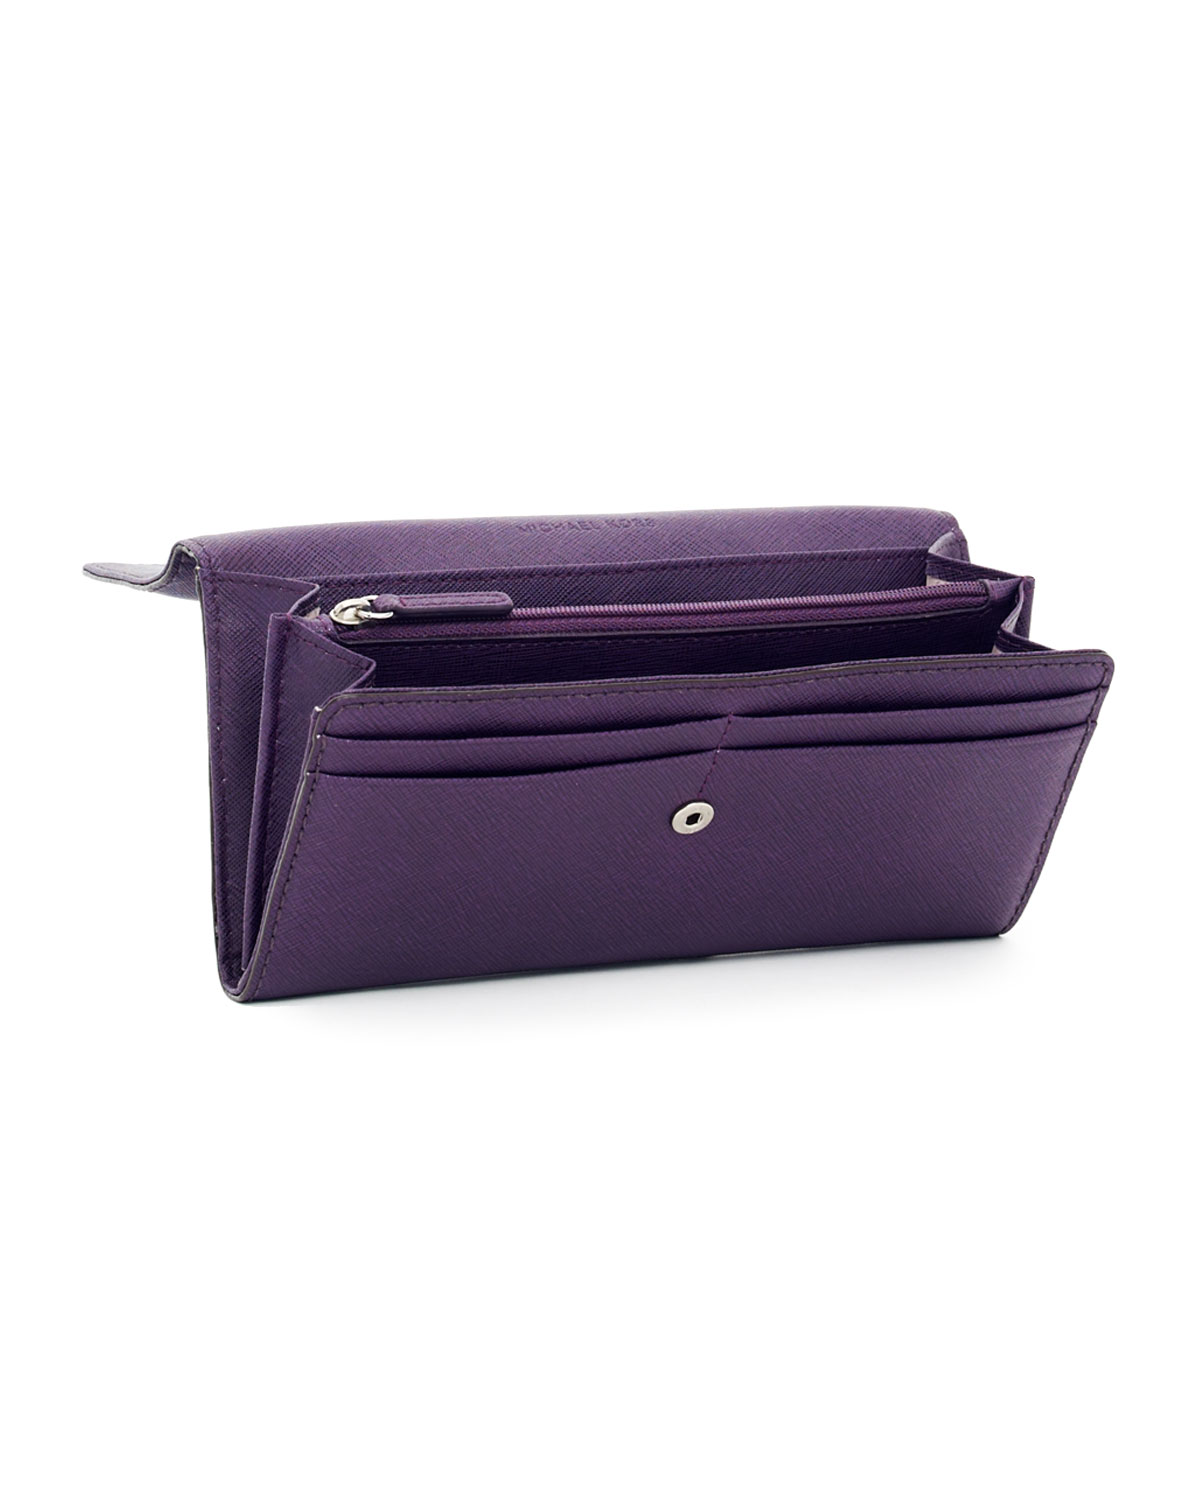 michael kors hamilton wallet purple